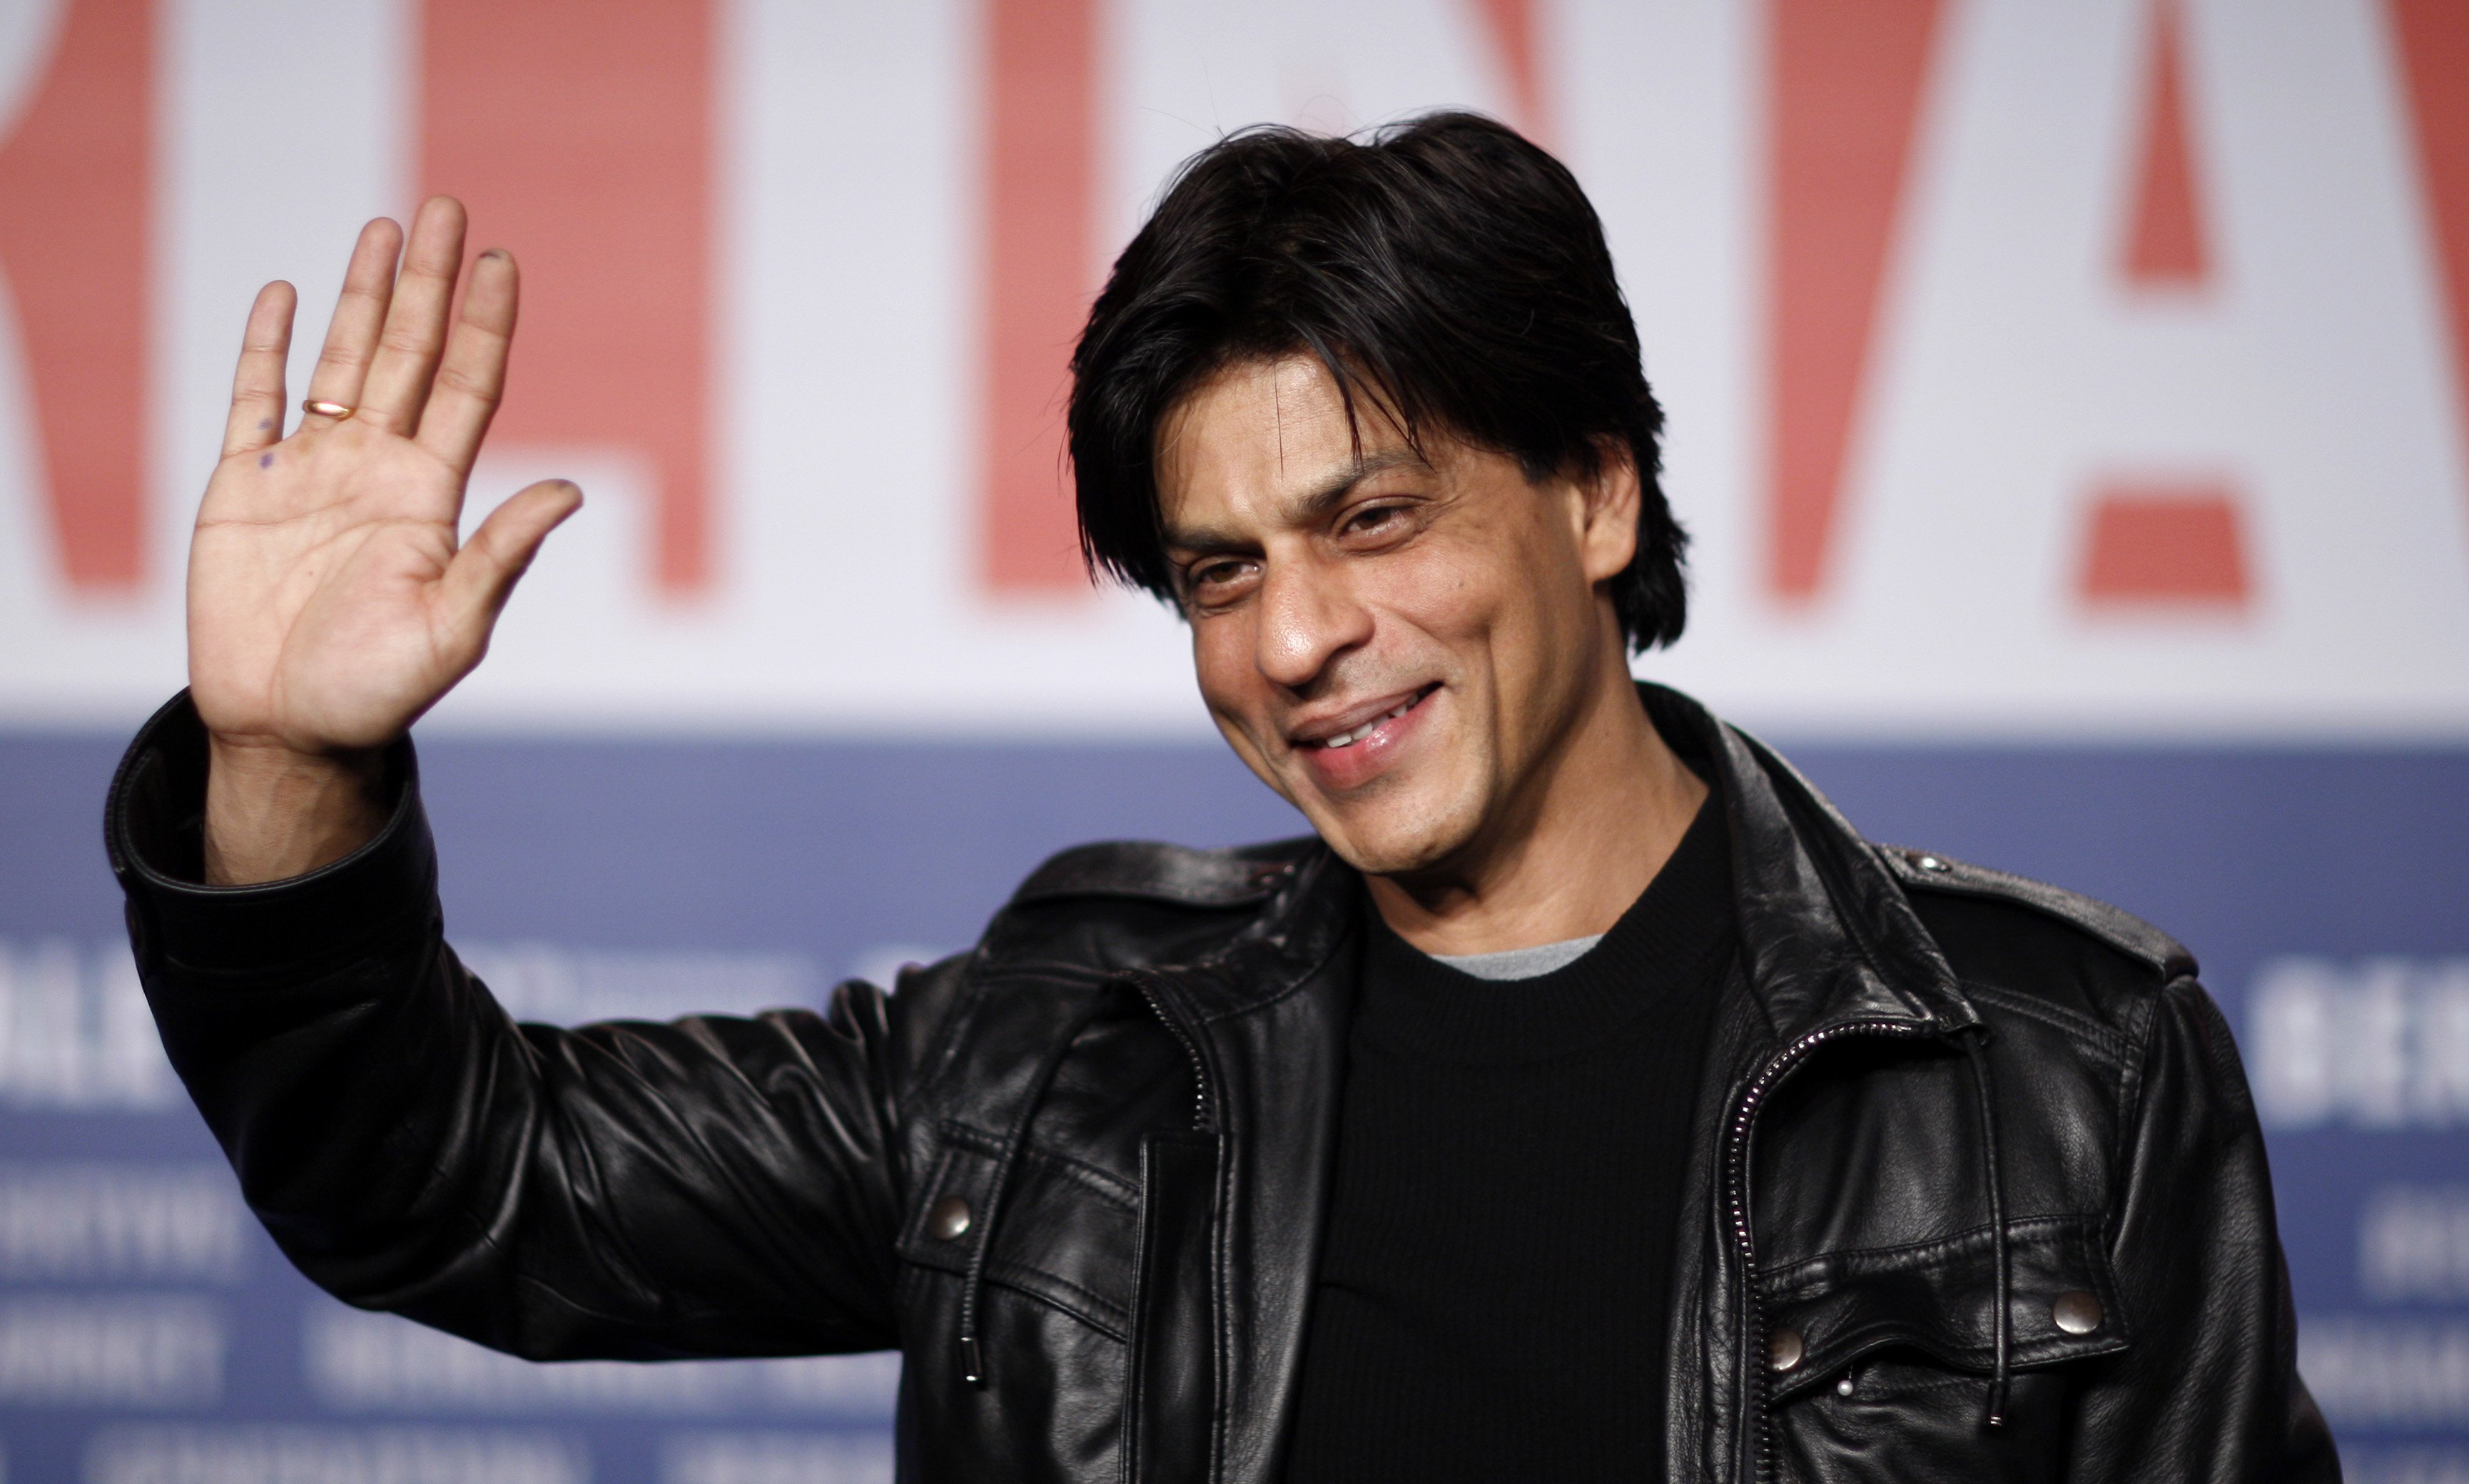 shah rukh khan: A video of Shah Rukh Khan pushing away an eager fan's hand  goes viral on social media - The Economic Times